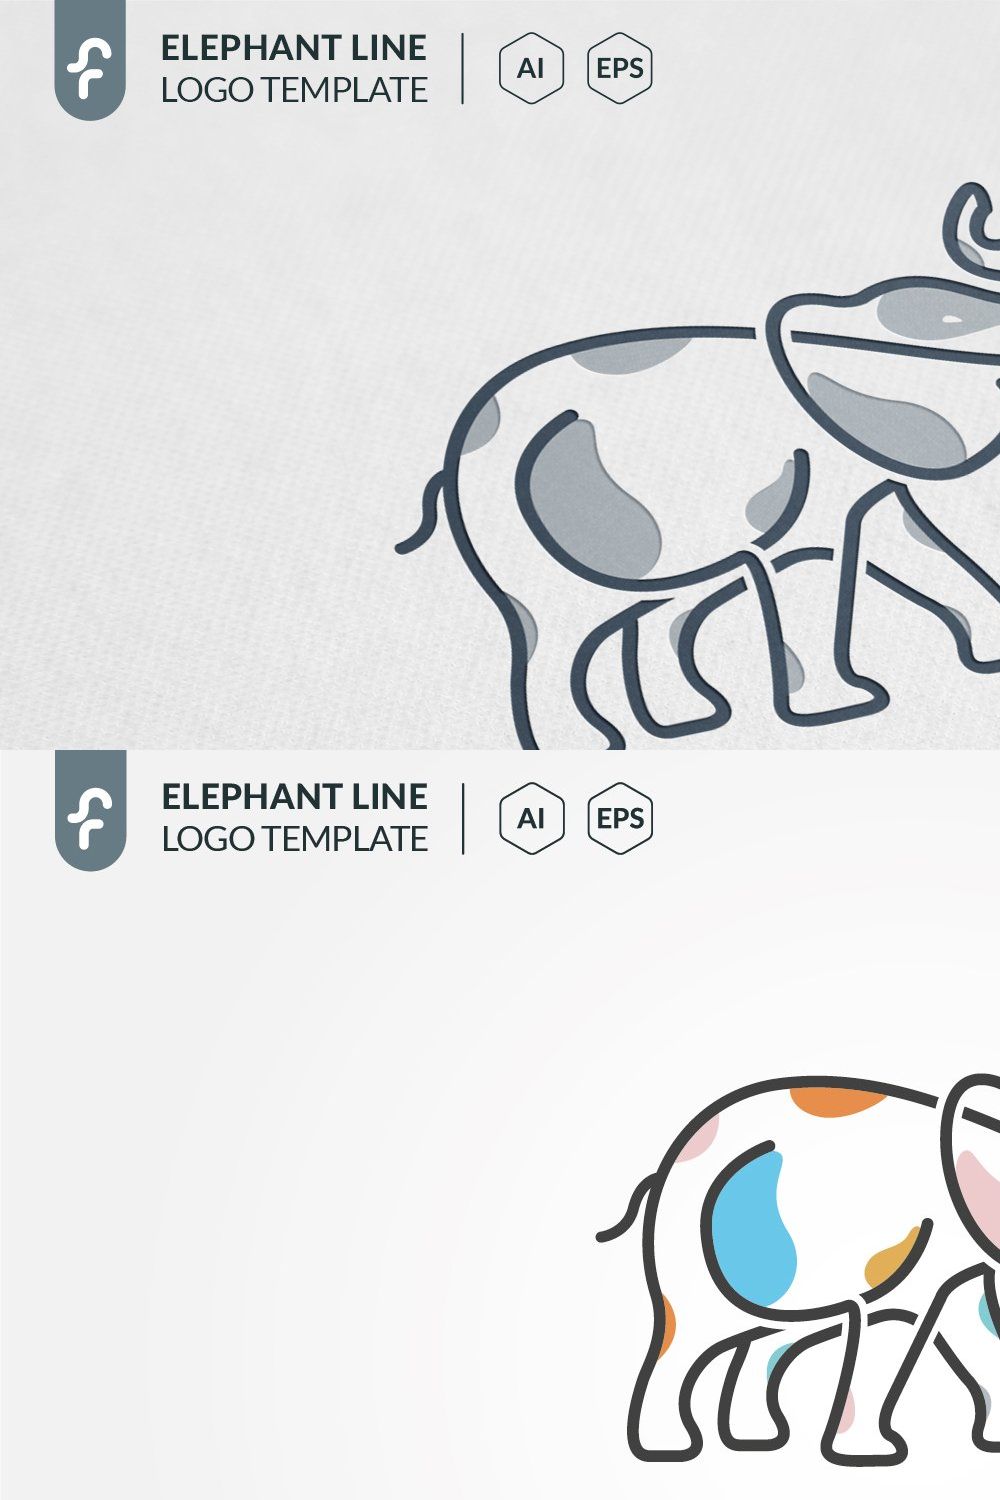 Elephant Line Logo pinterest preview image.